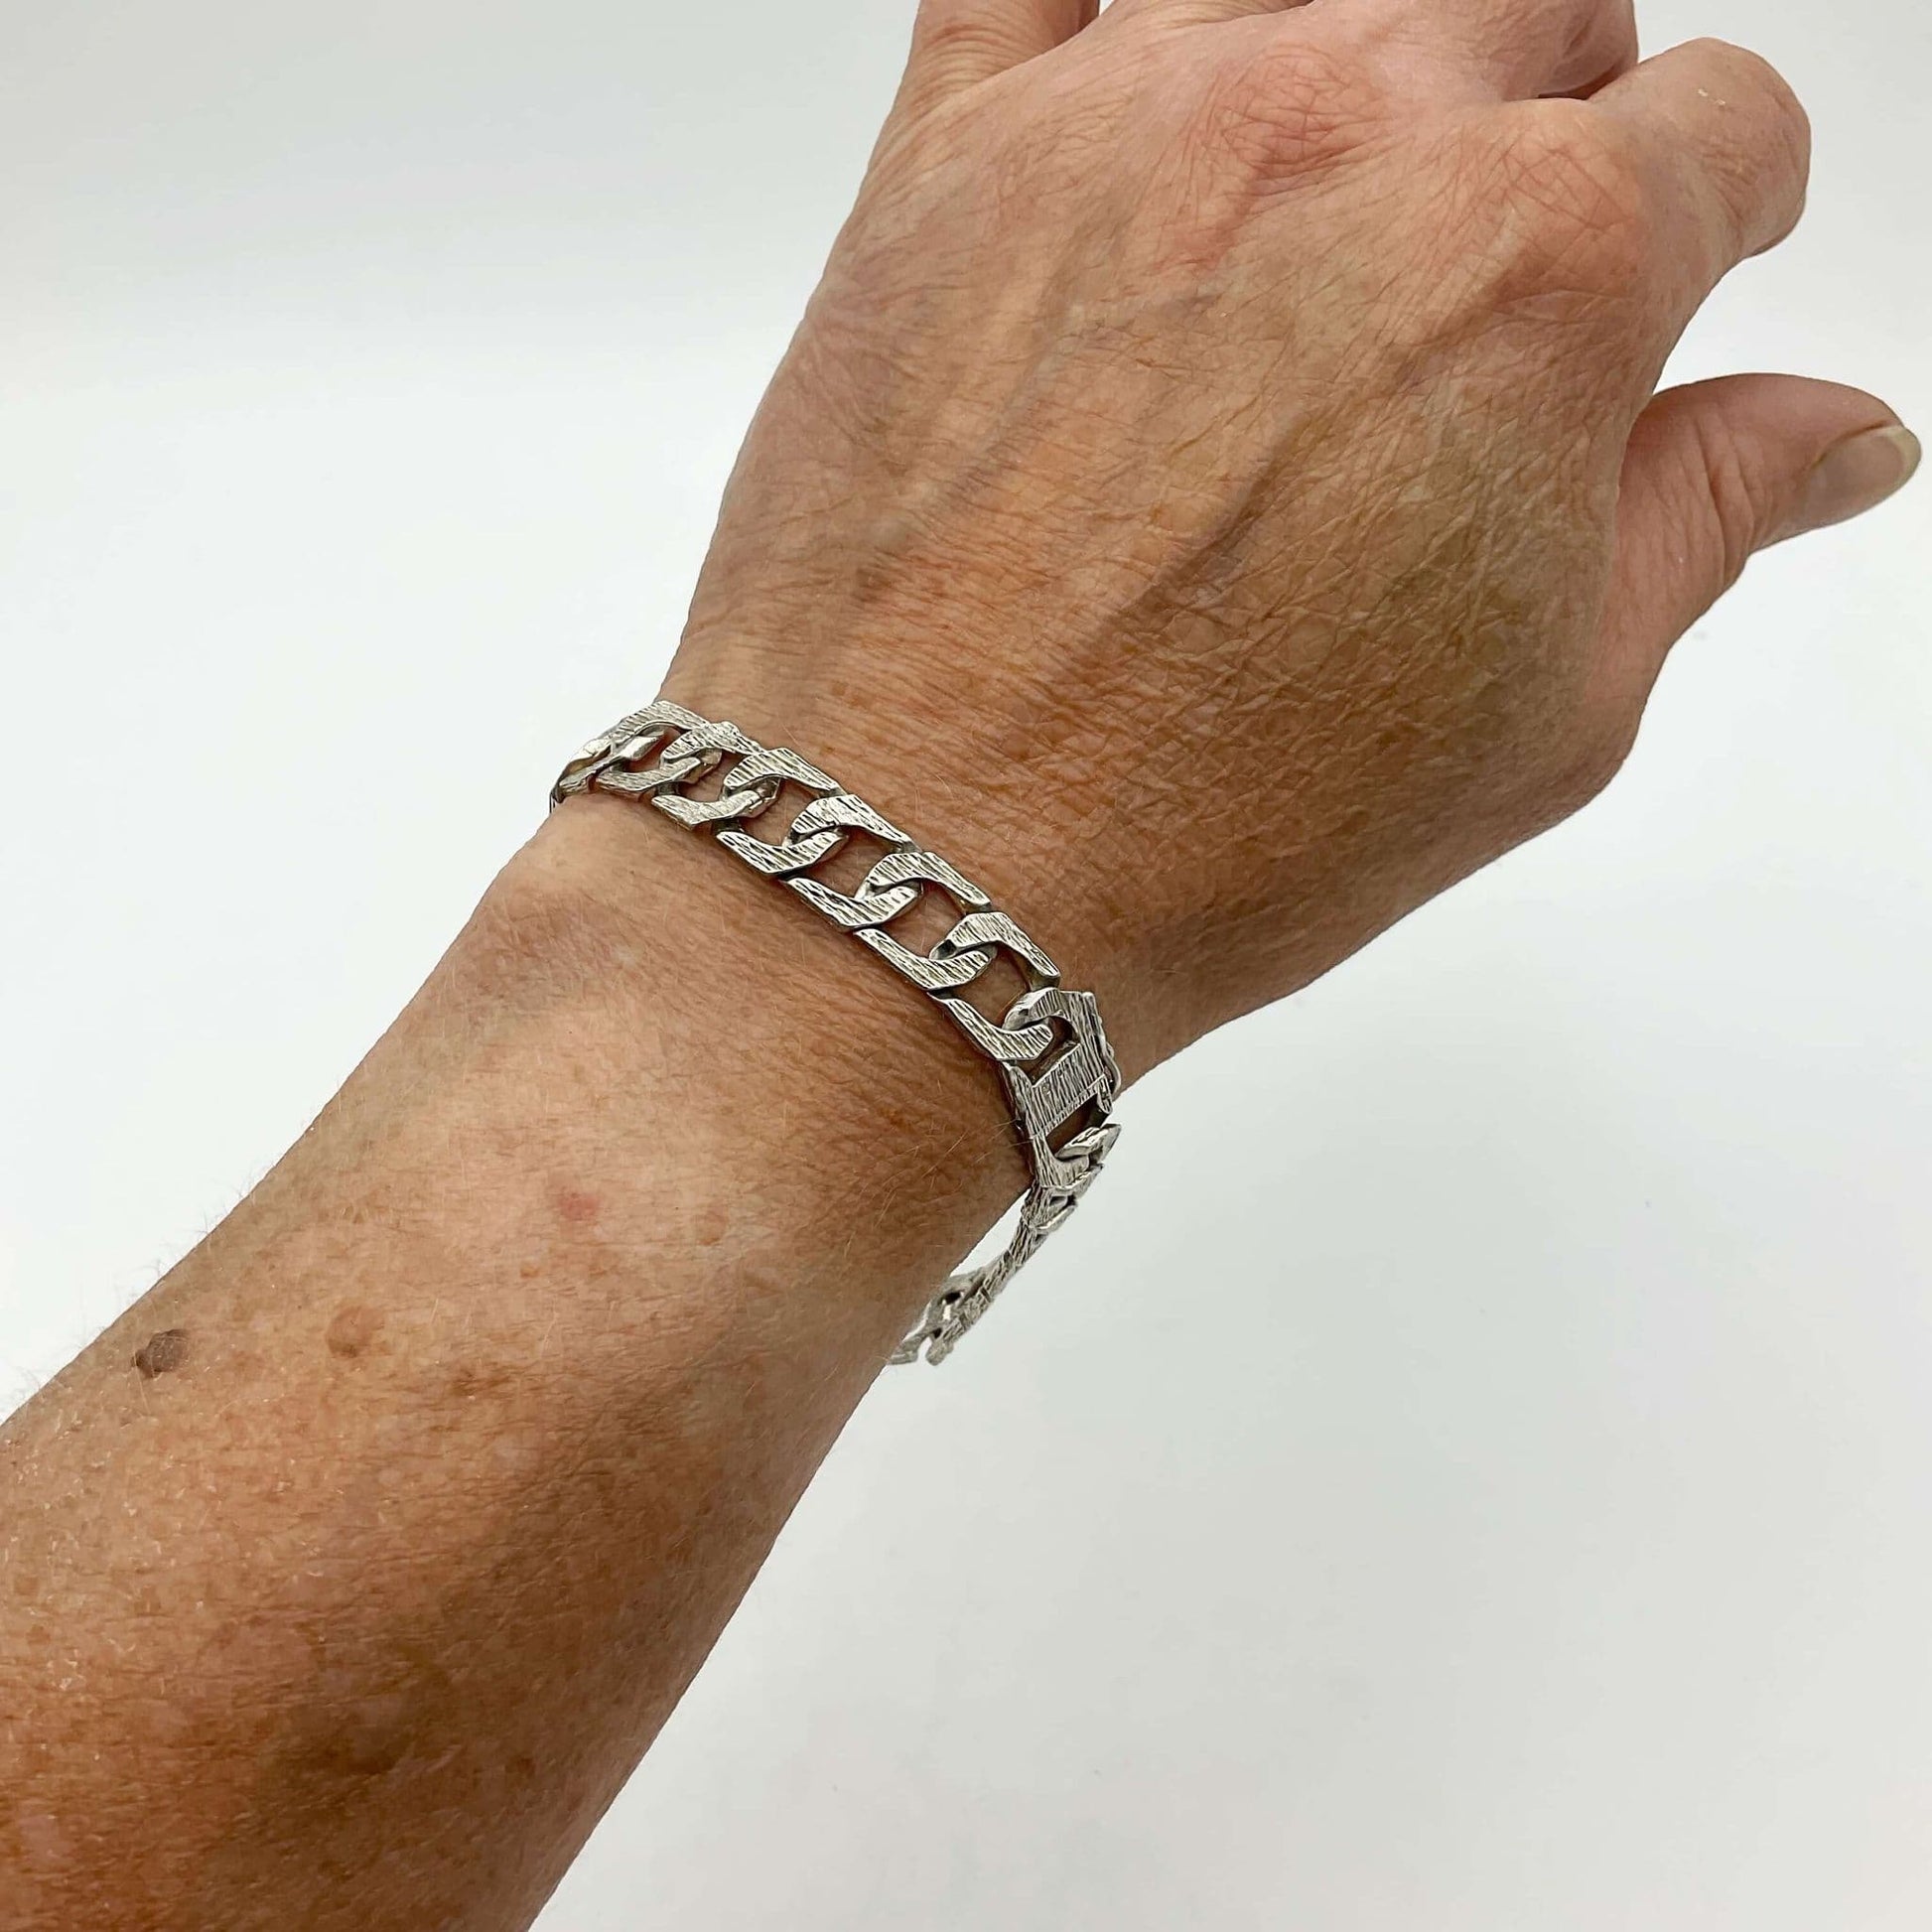 Silver chain bracelet on a wrist